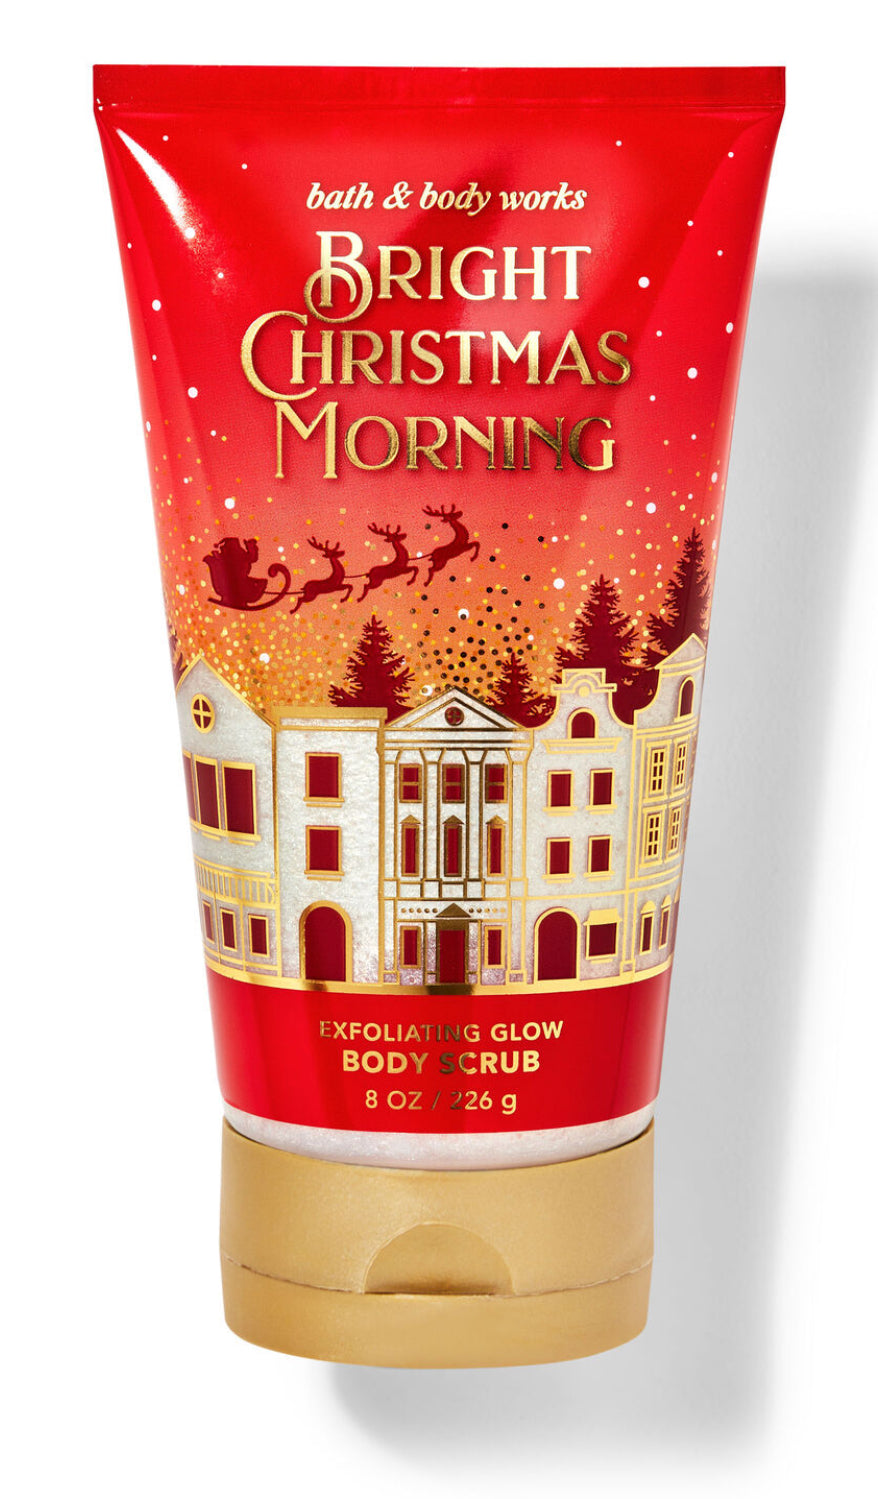 Bath & Body Works Bright Christmas Morning Body Scrub Shea Butter Exfoliating for Skin